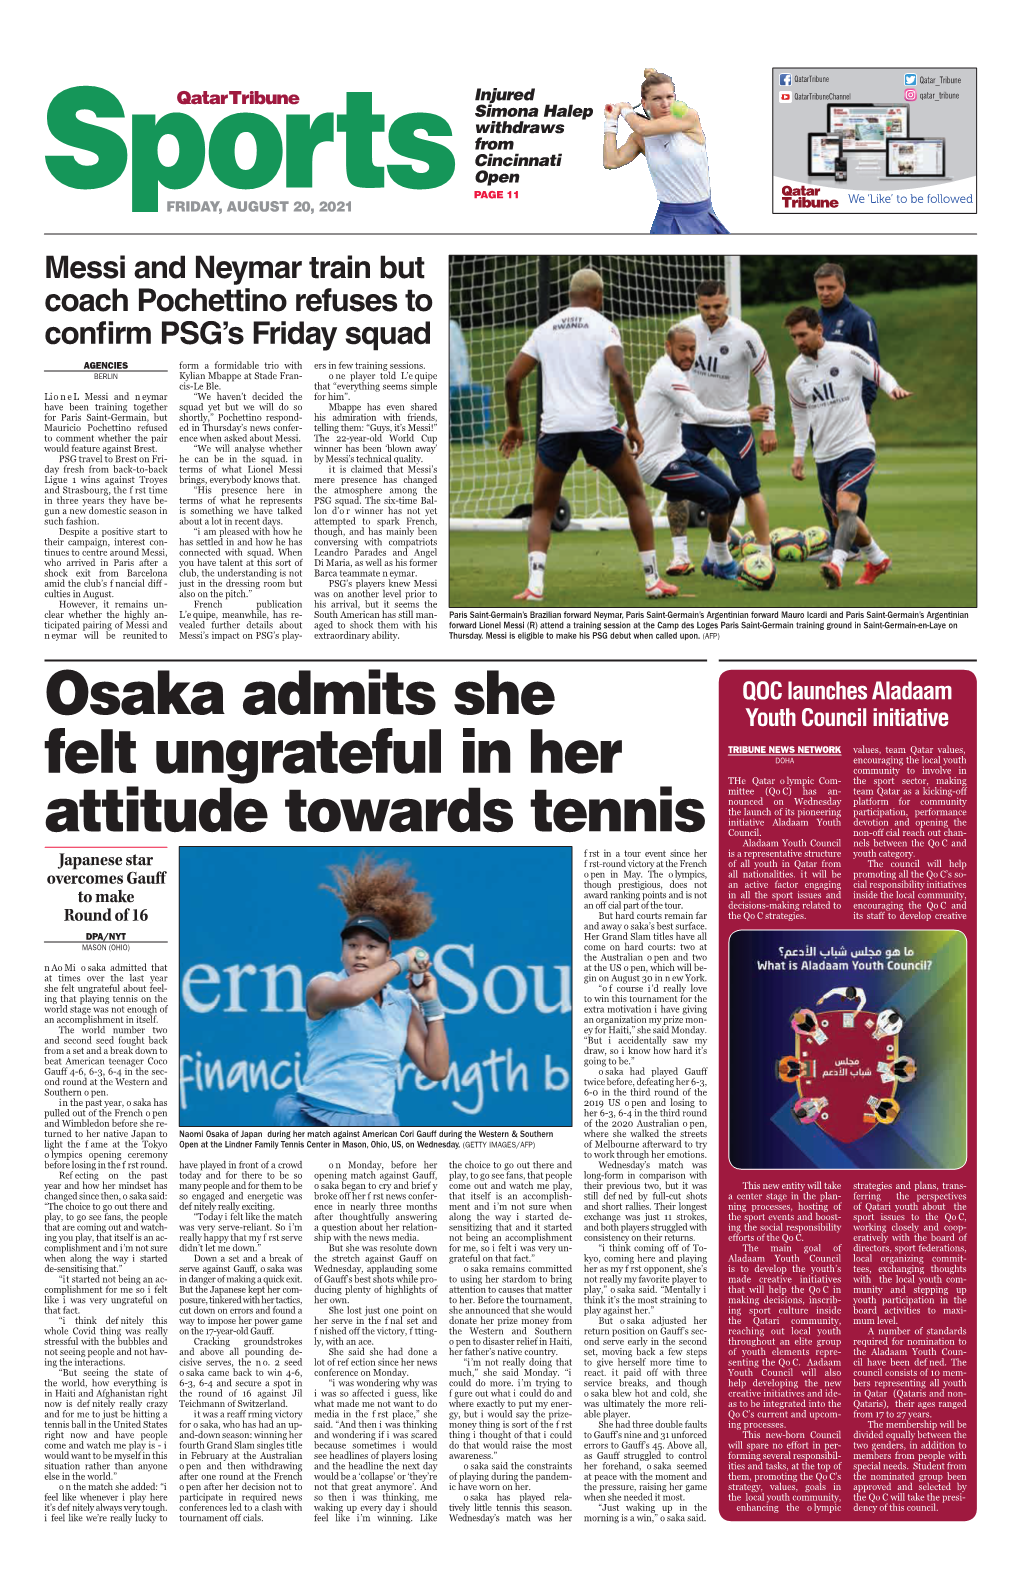 Osaka Admits She Felt Ungrateful in Her Attitude Towards Tennis